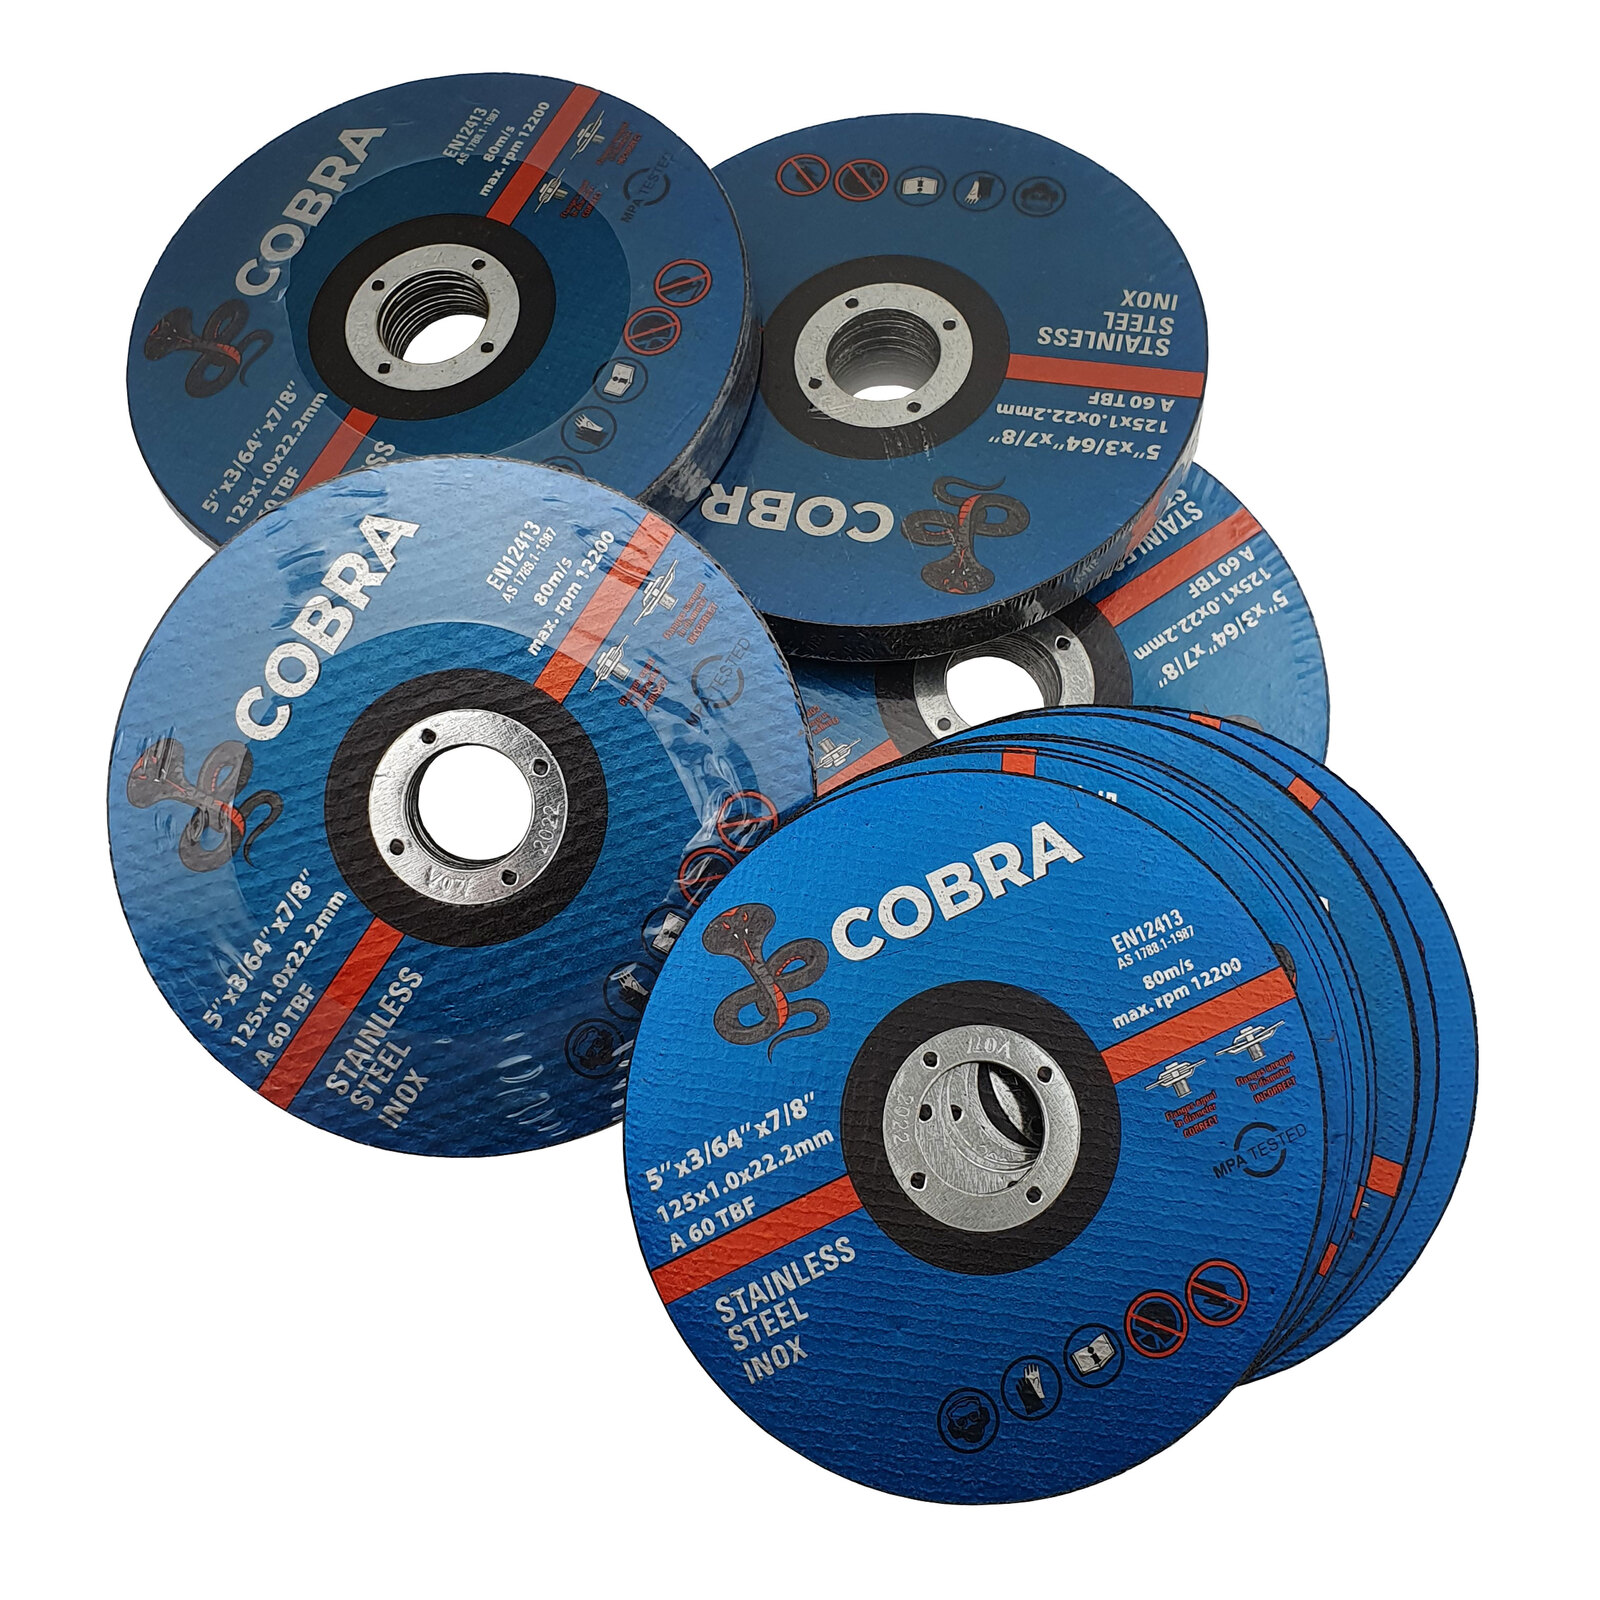 10x Cobra 5 125mm 1mm Cutting Disc Grinder Cut Off Wheel 10mm